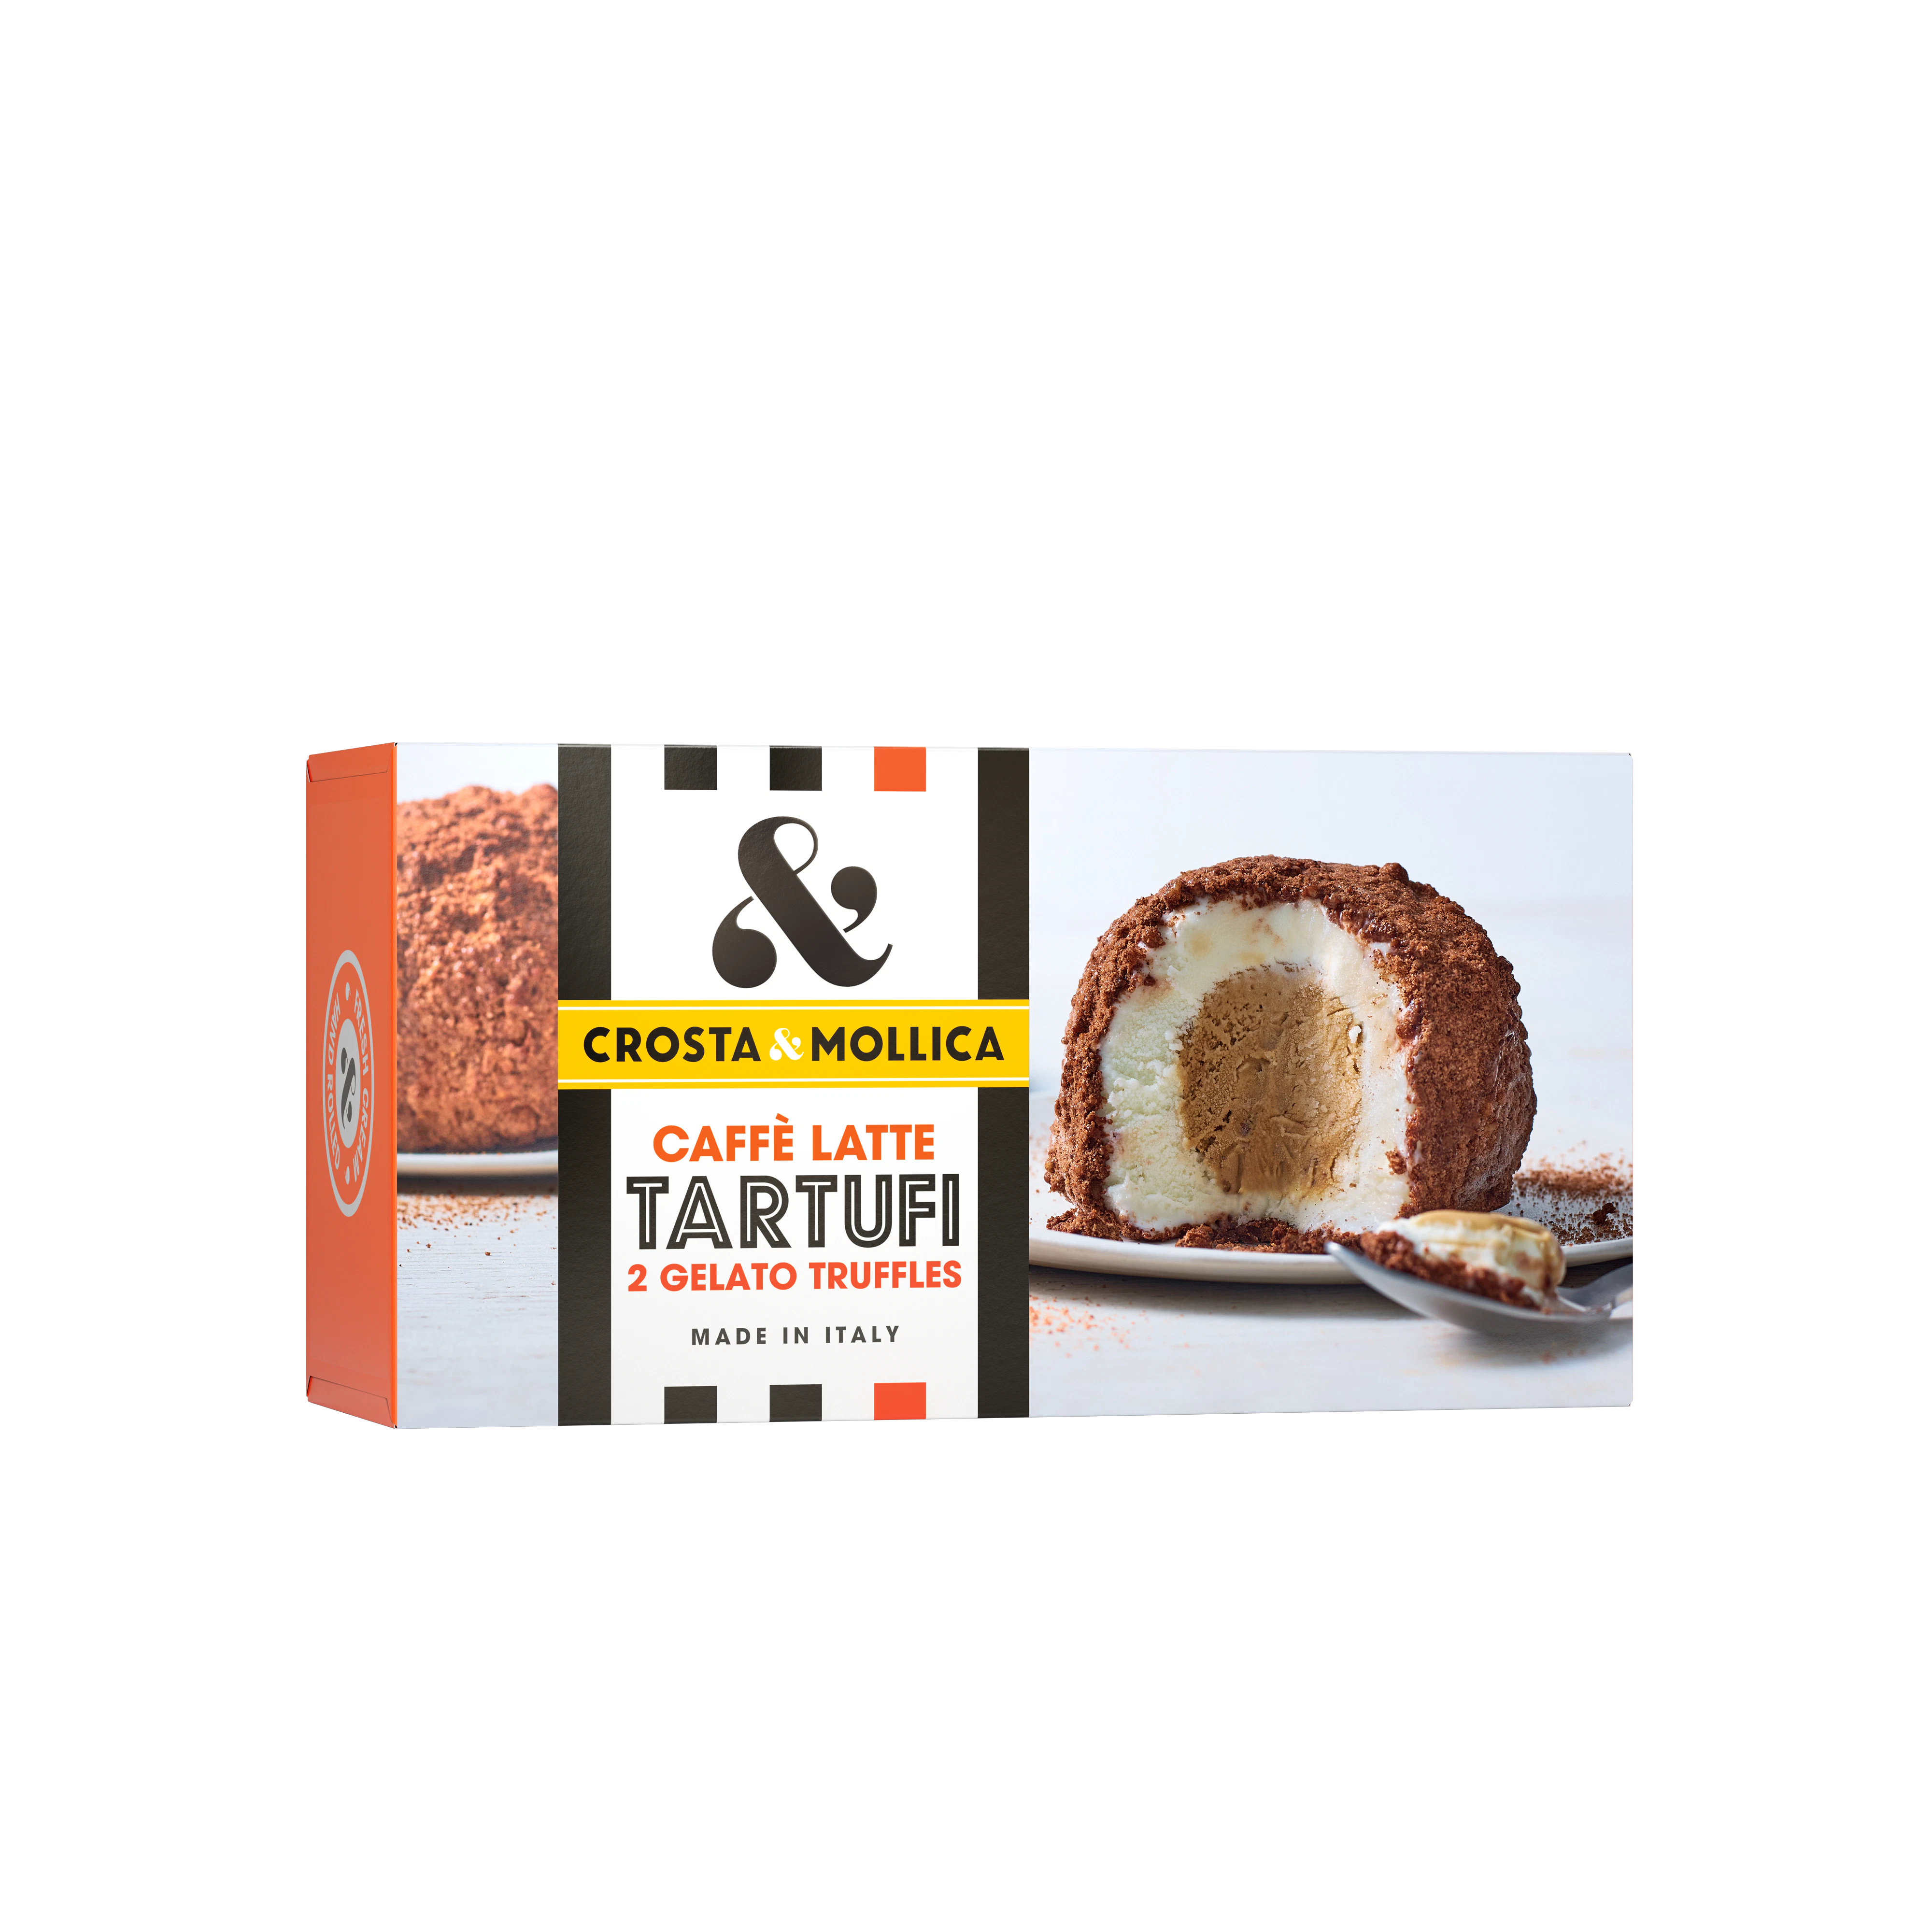 Caffè Latte Tartufi packaging.